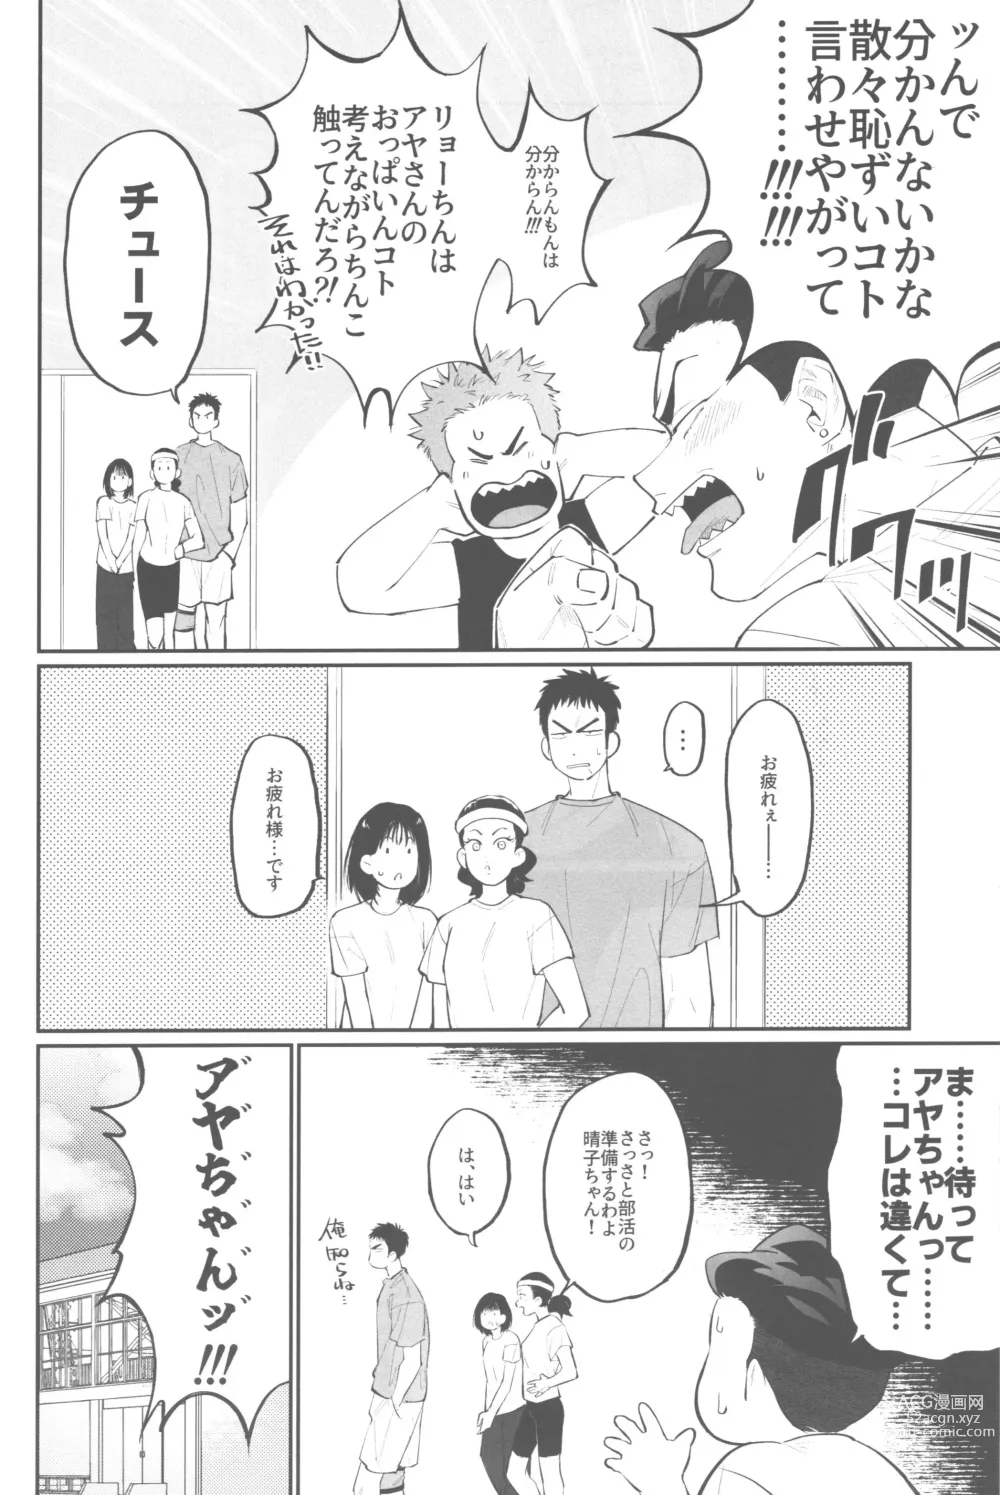 Page 6 of doujinshi Shohoku Kumasaki Rendezvous